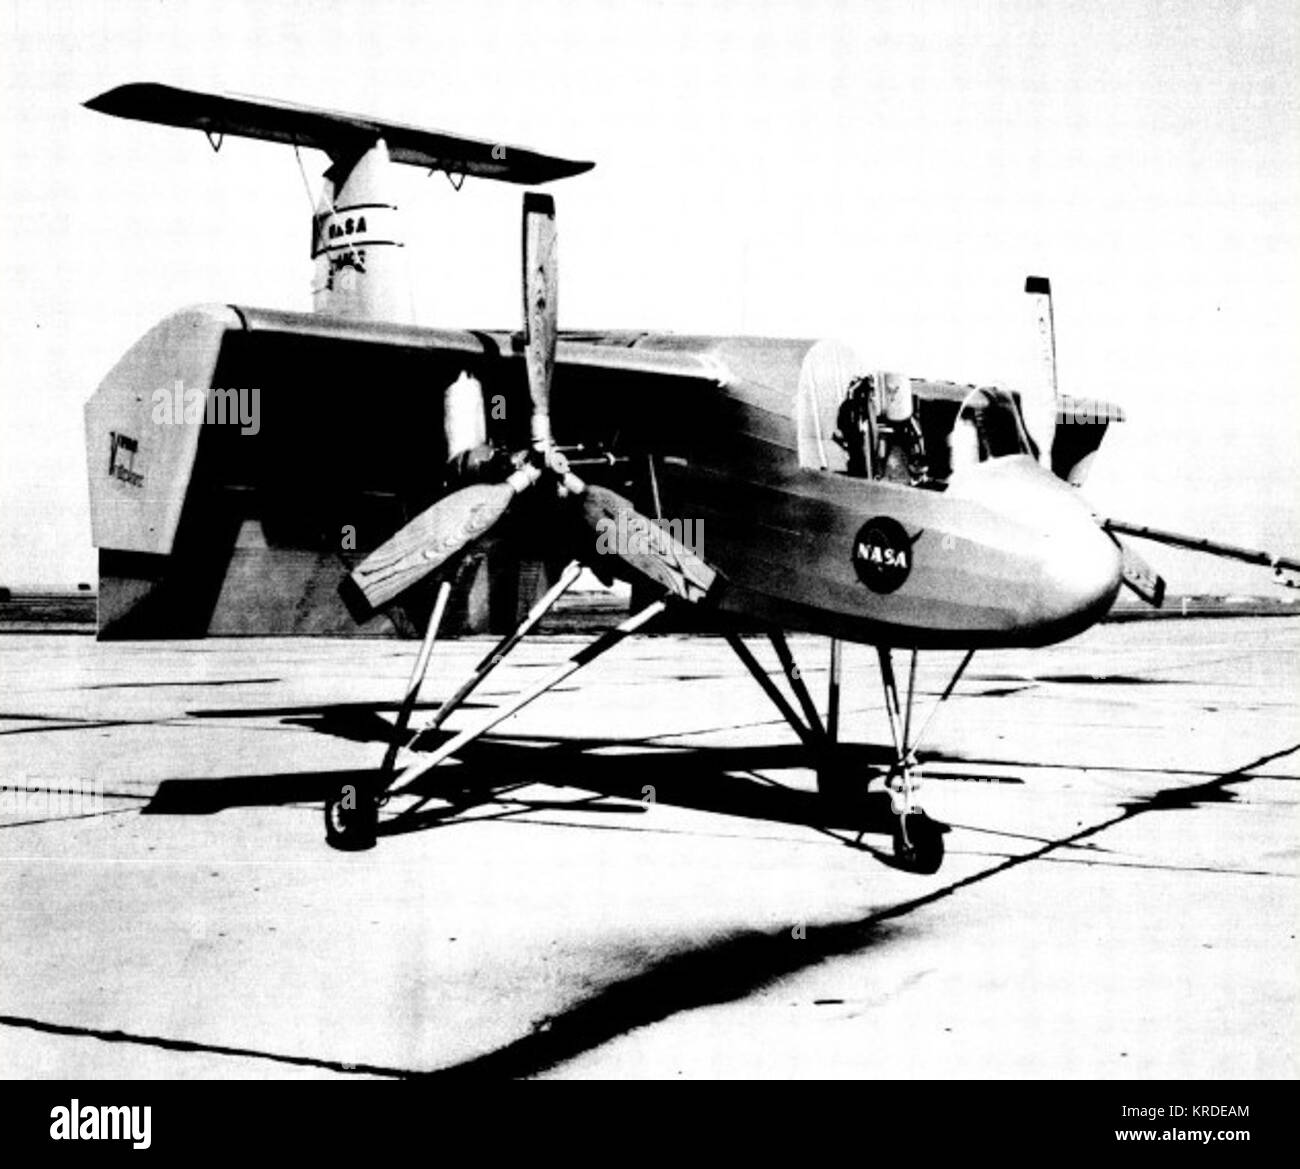 VZ-3RY flaps down on runway Stock Photo